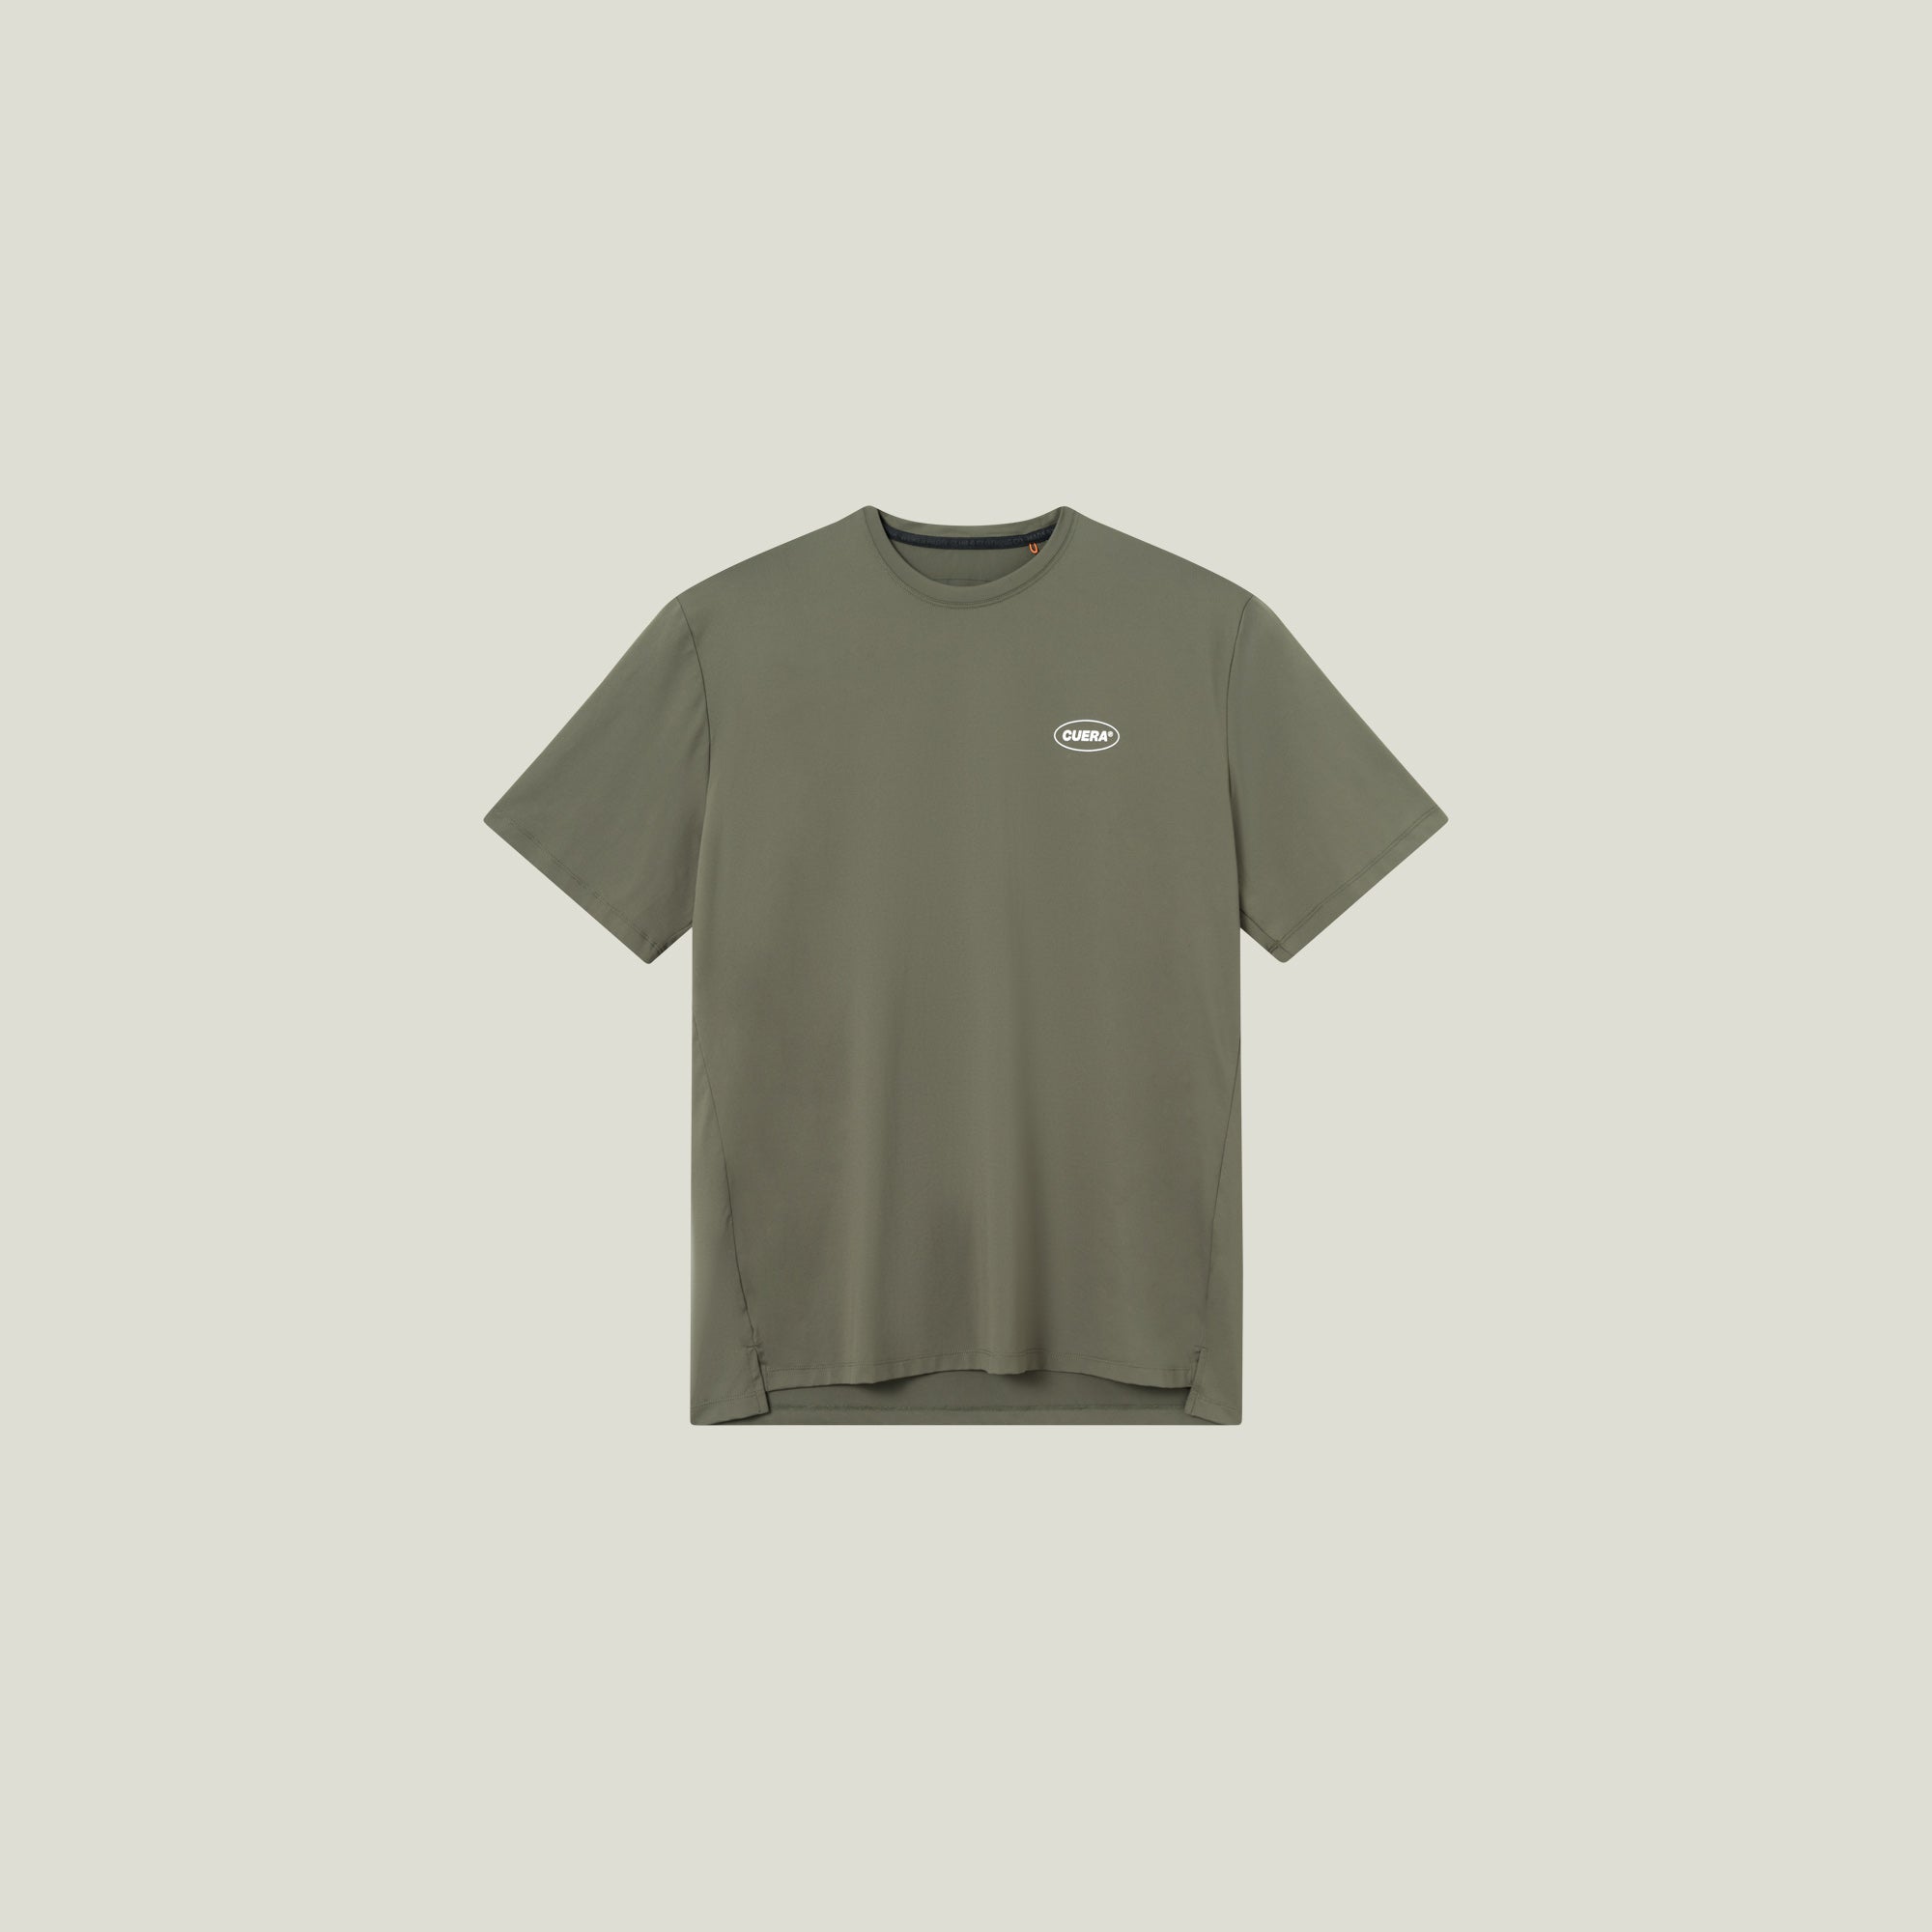 Cuera Oncourt Made T-shirt (Army) - XXL